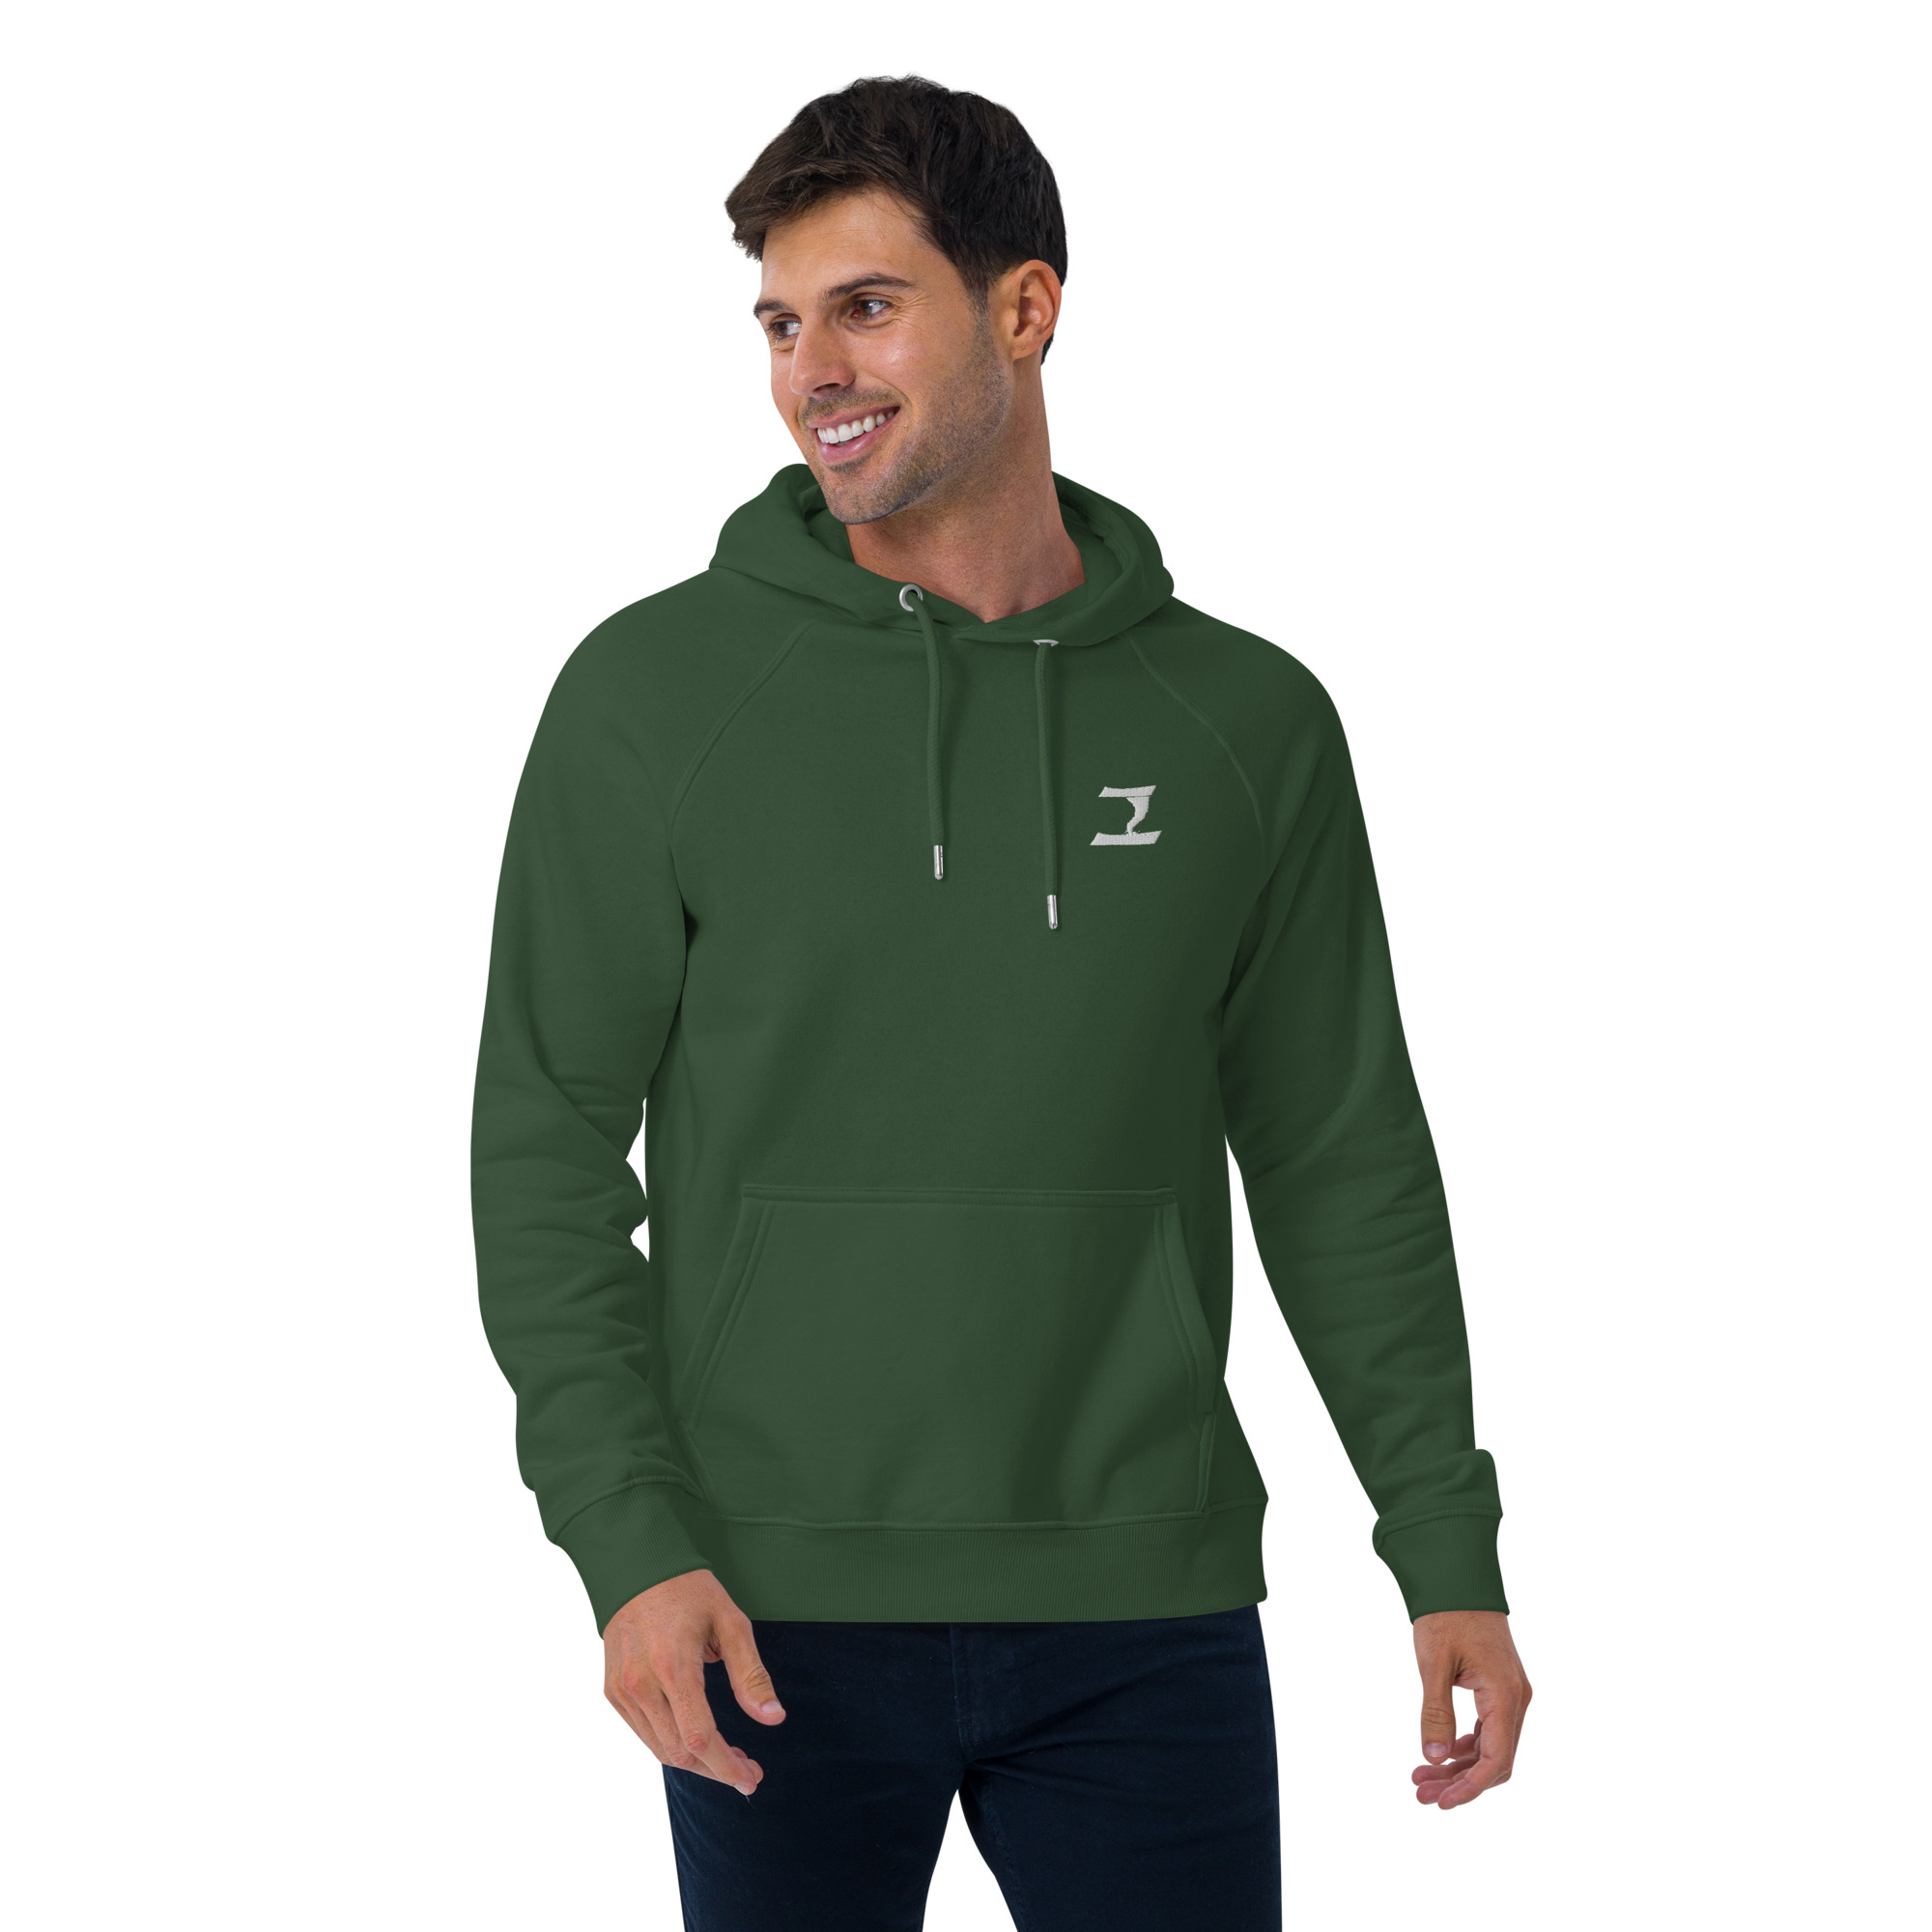 unisex-eco-raglan-hoodie-bottle-green-front-2-631695eb0742d.jpg